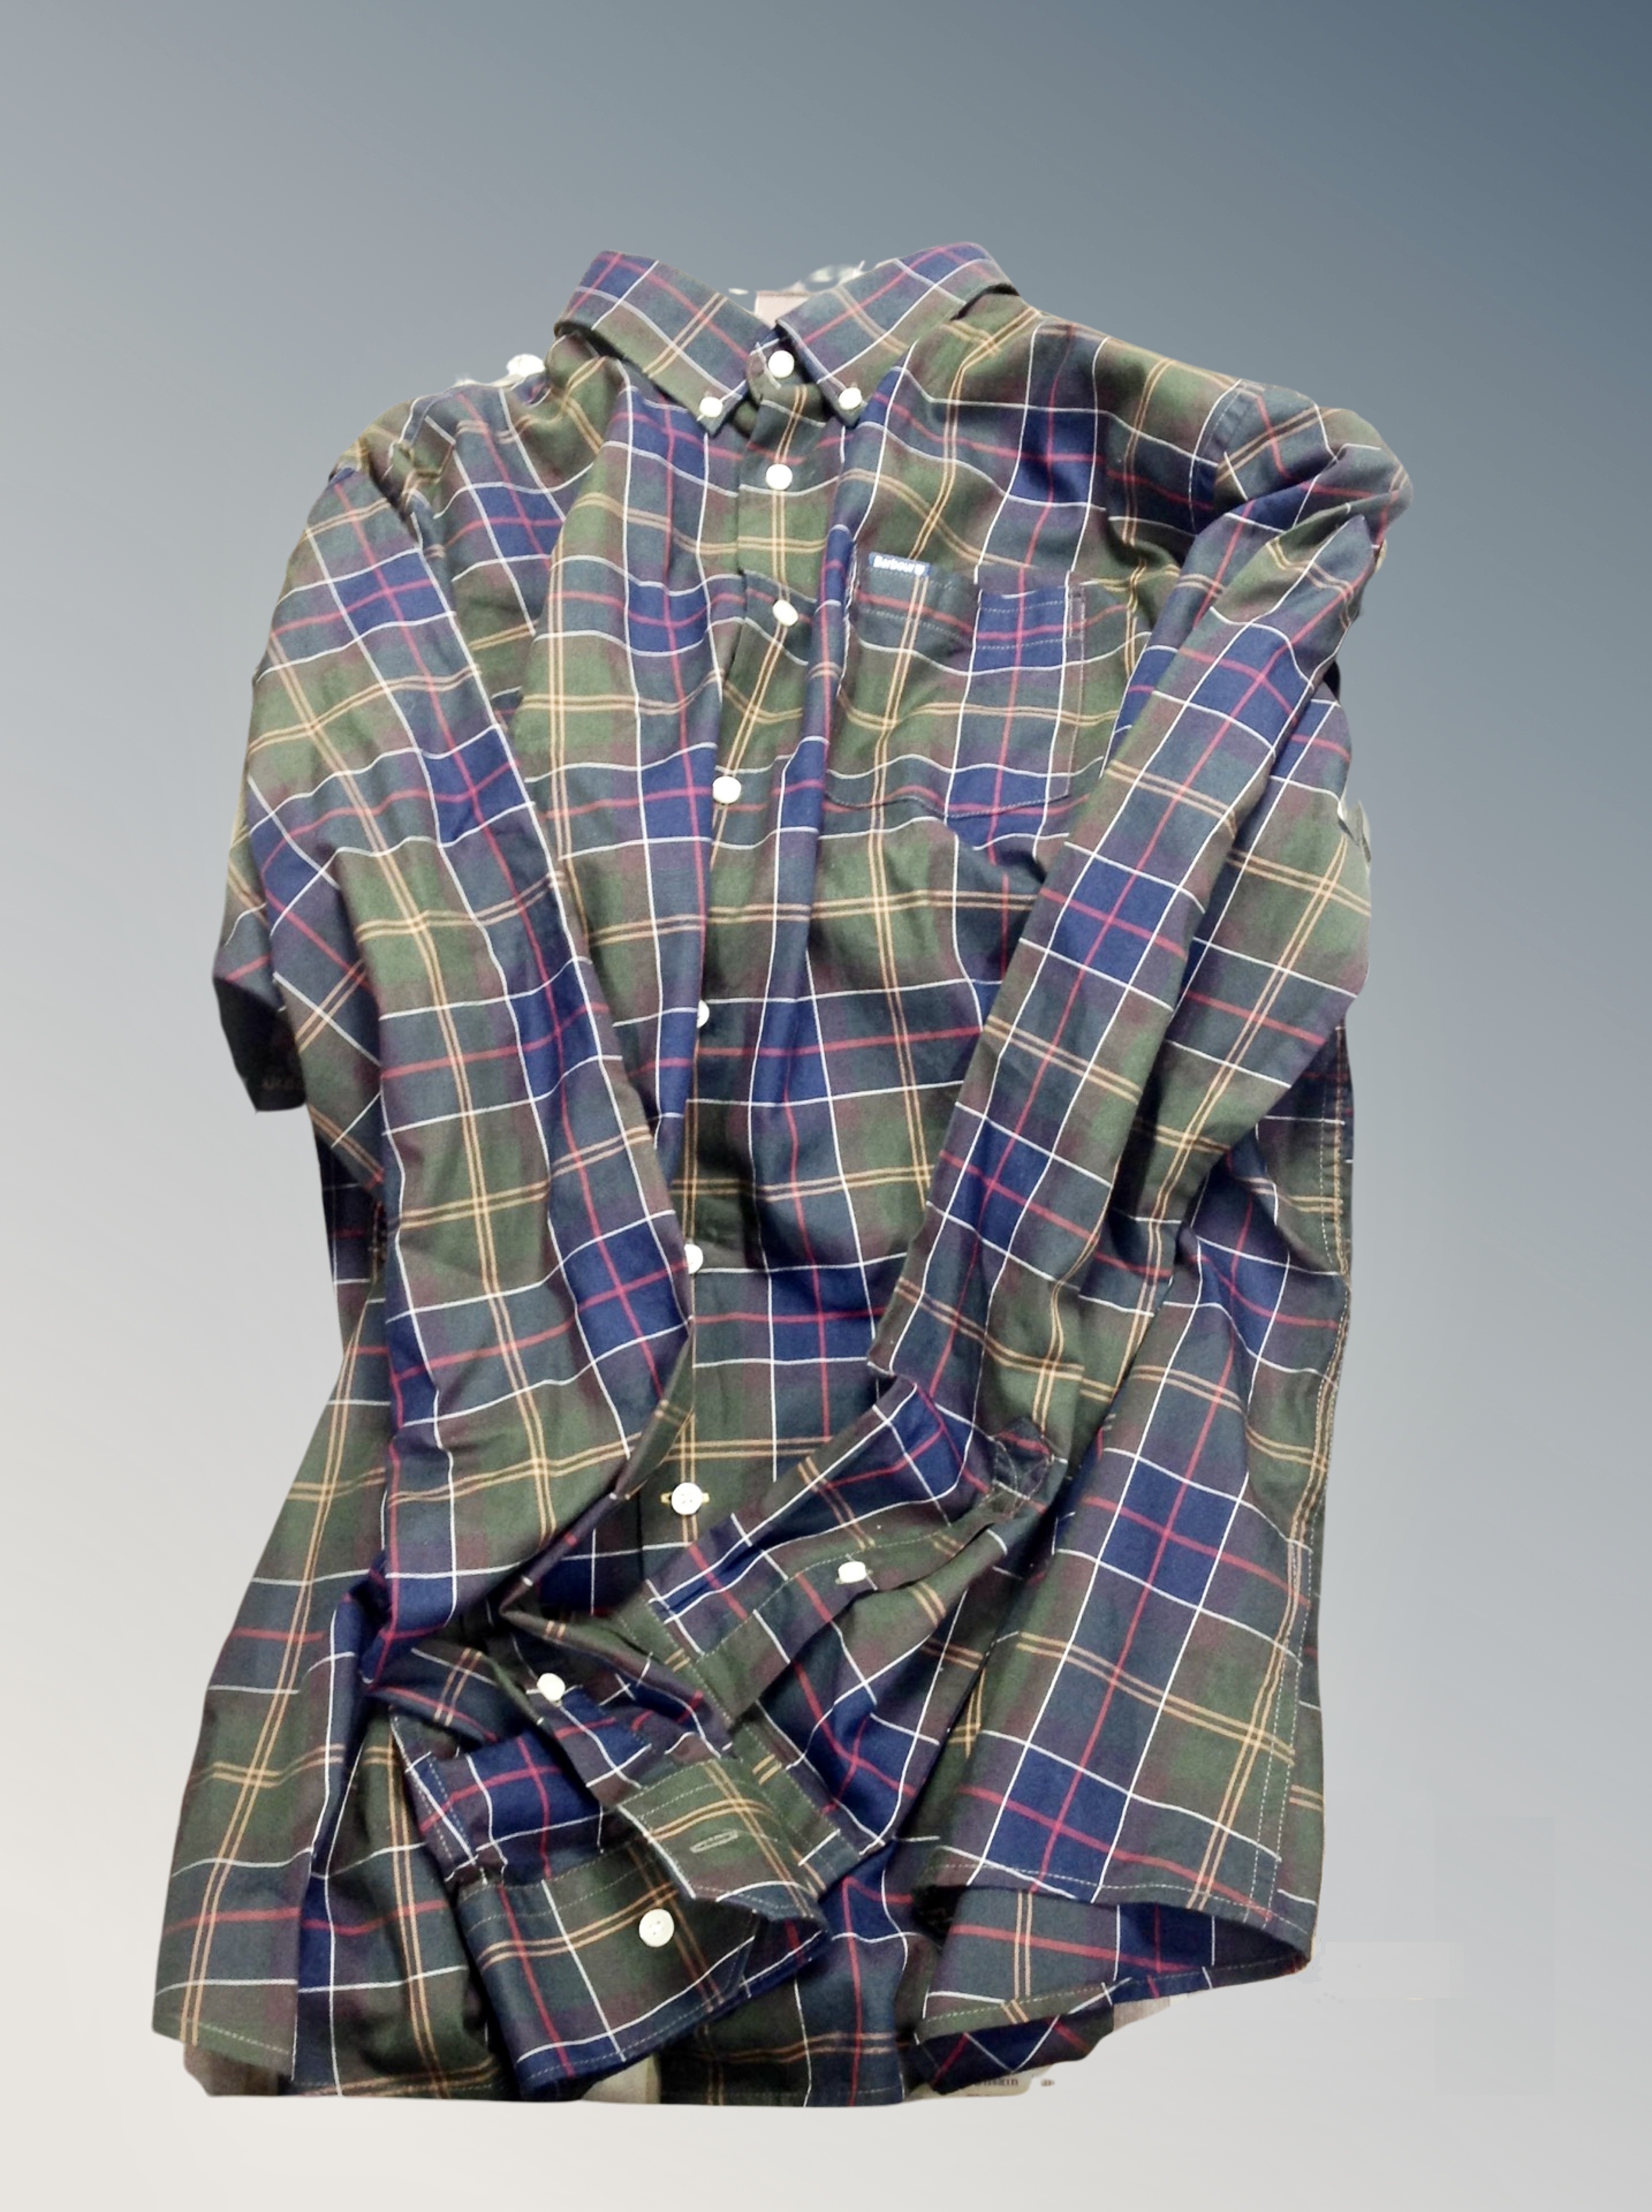 A Barbour shirt size XL on hanger,